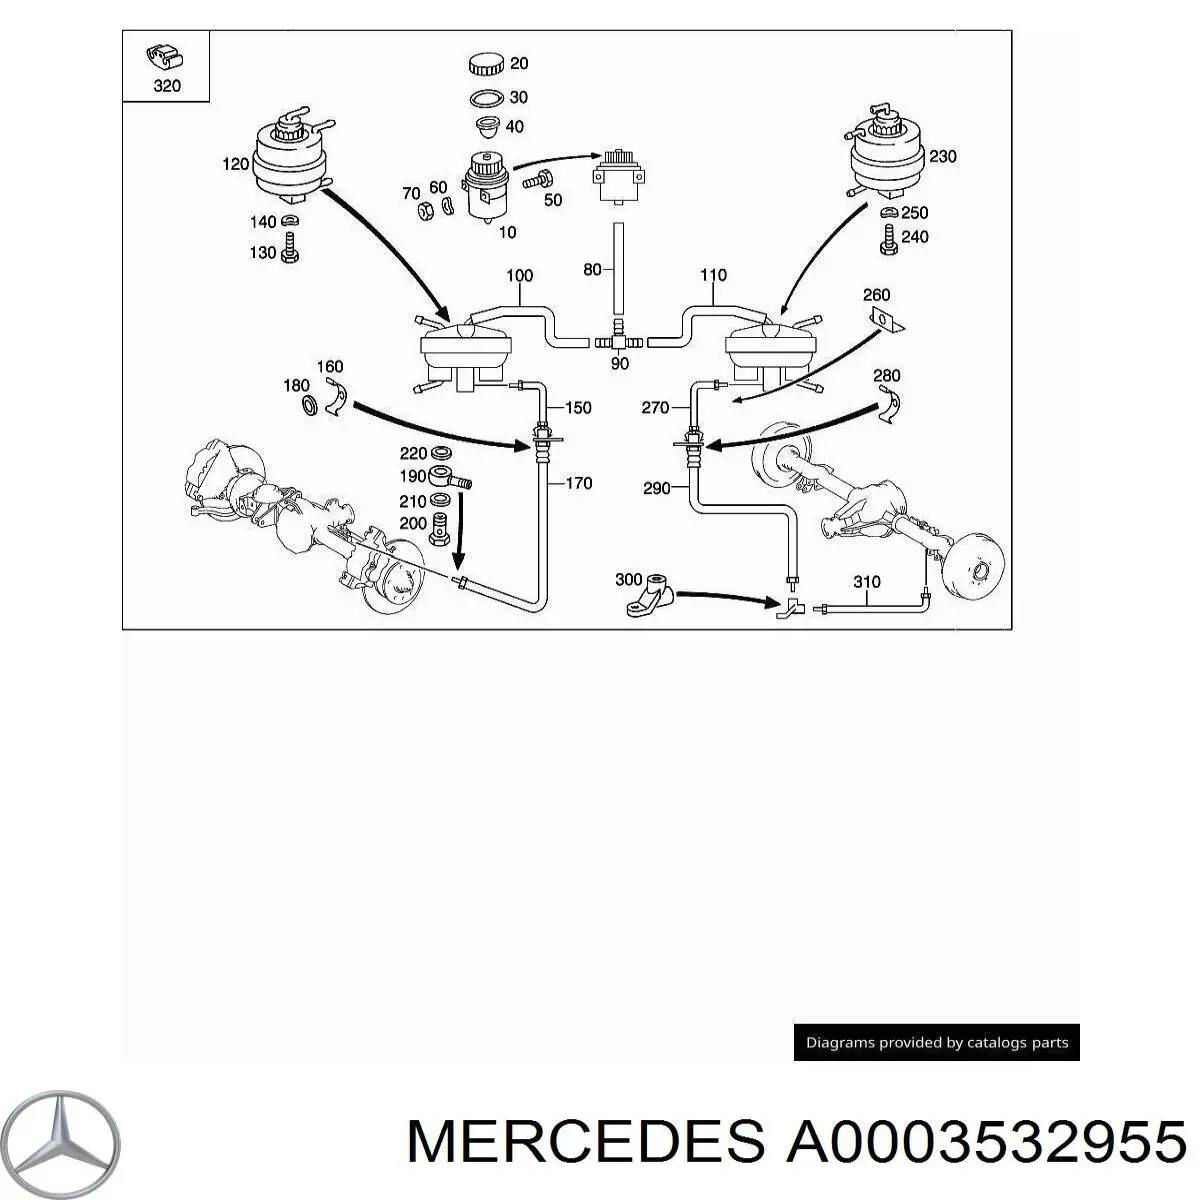 Энергоаккумулятор привода дифференциала моста Mercedes A0003532955